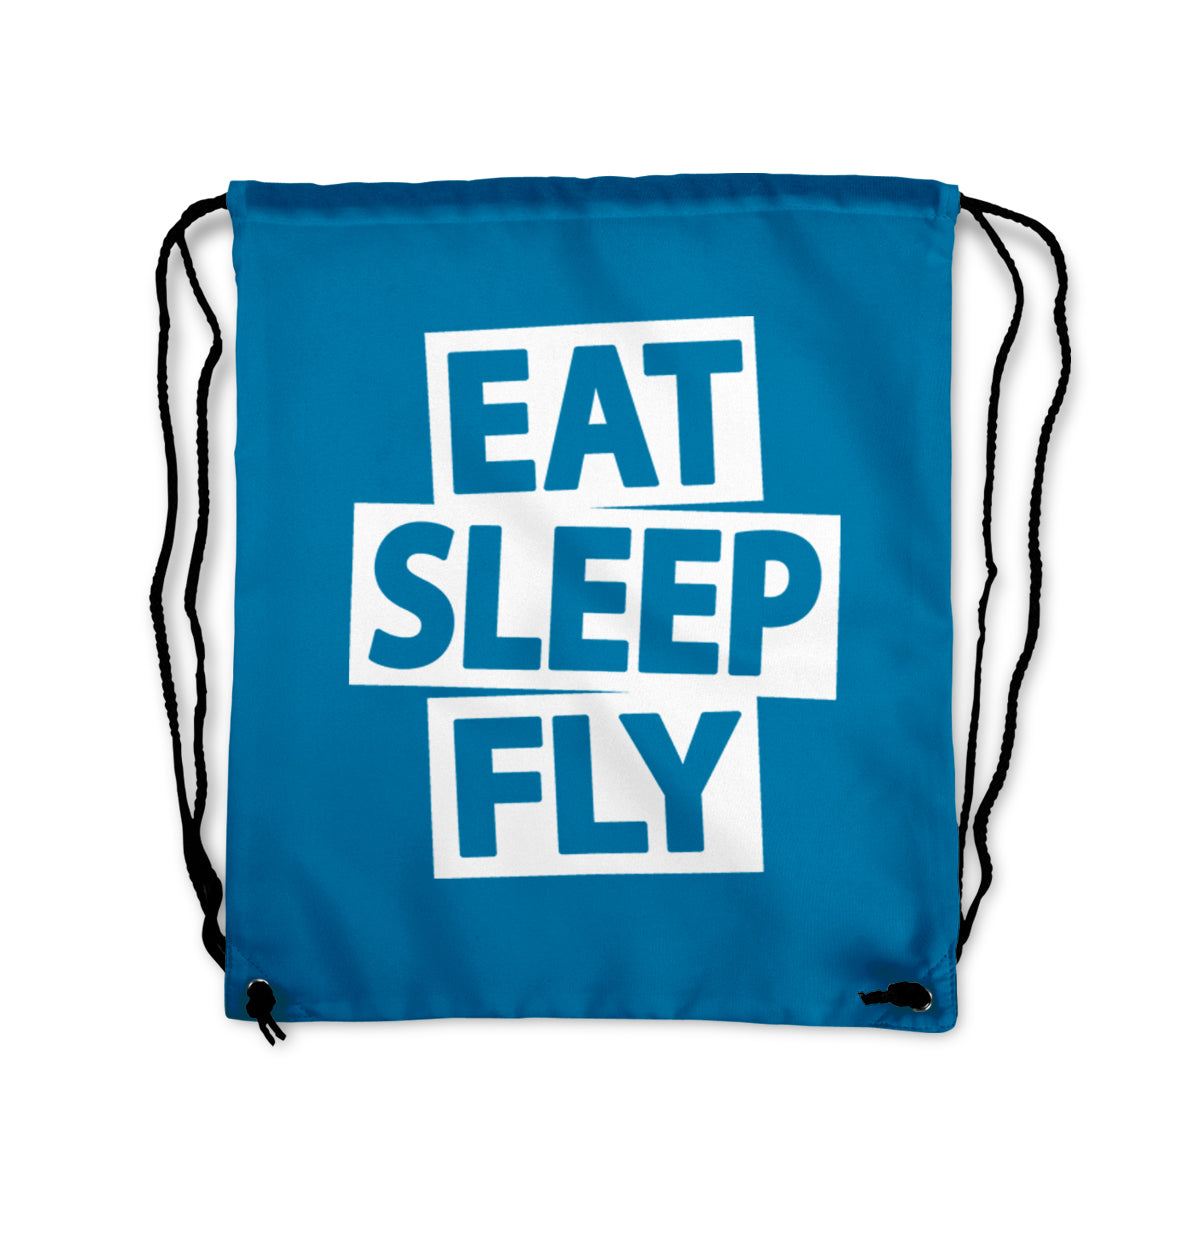 Eat Sleep Fly Designed Drawstring Bags